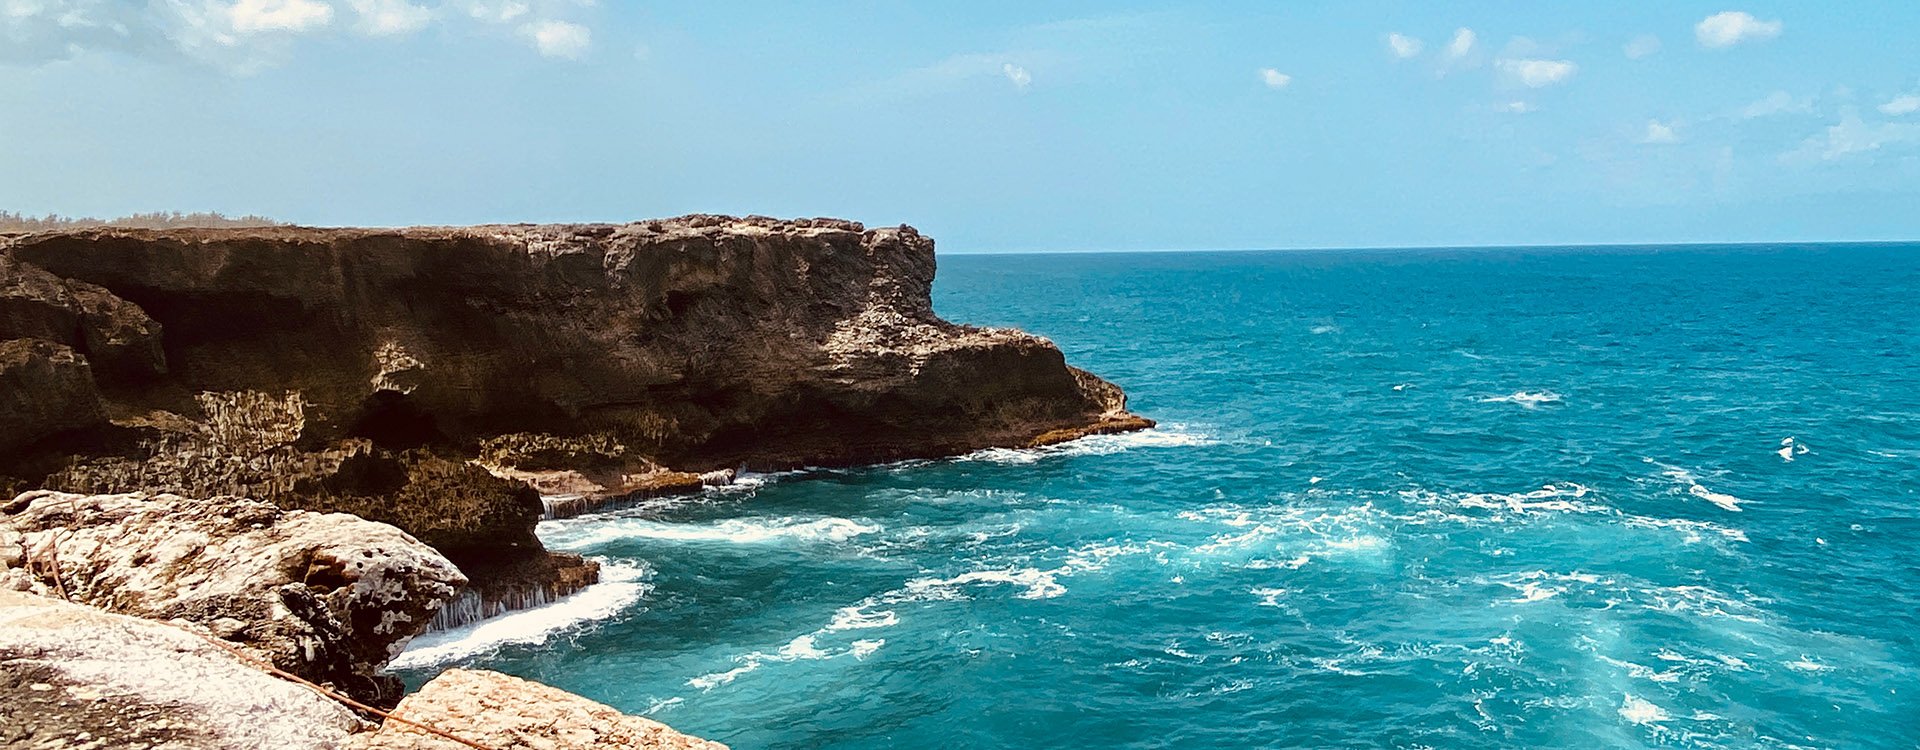 The island landscape of Barbados